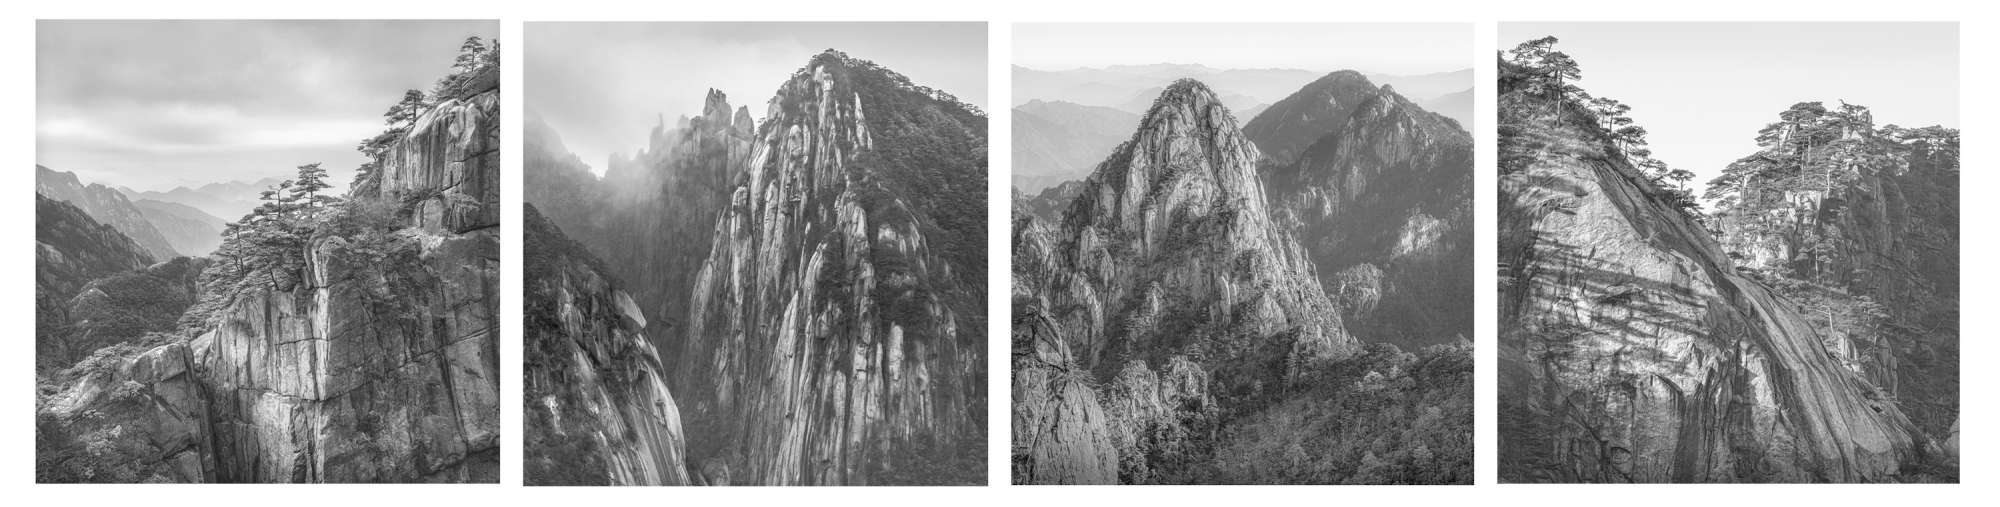 Yellow Mountain China, Michael Pilkington aspect2i